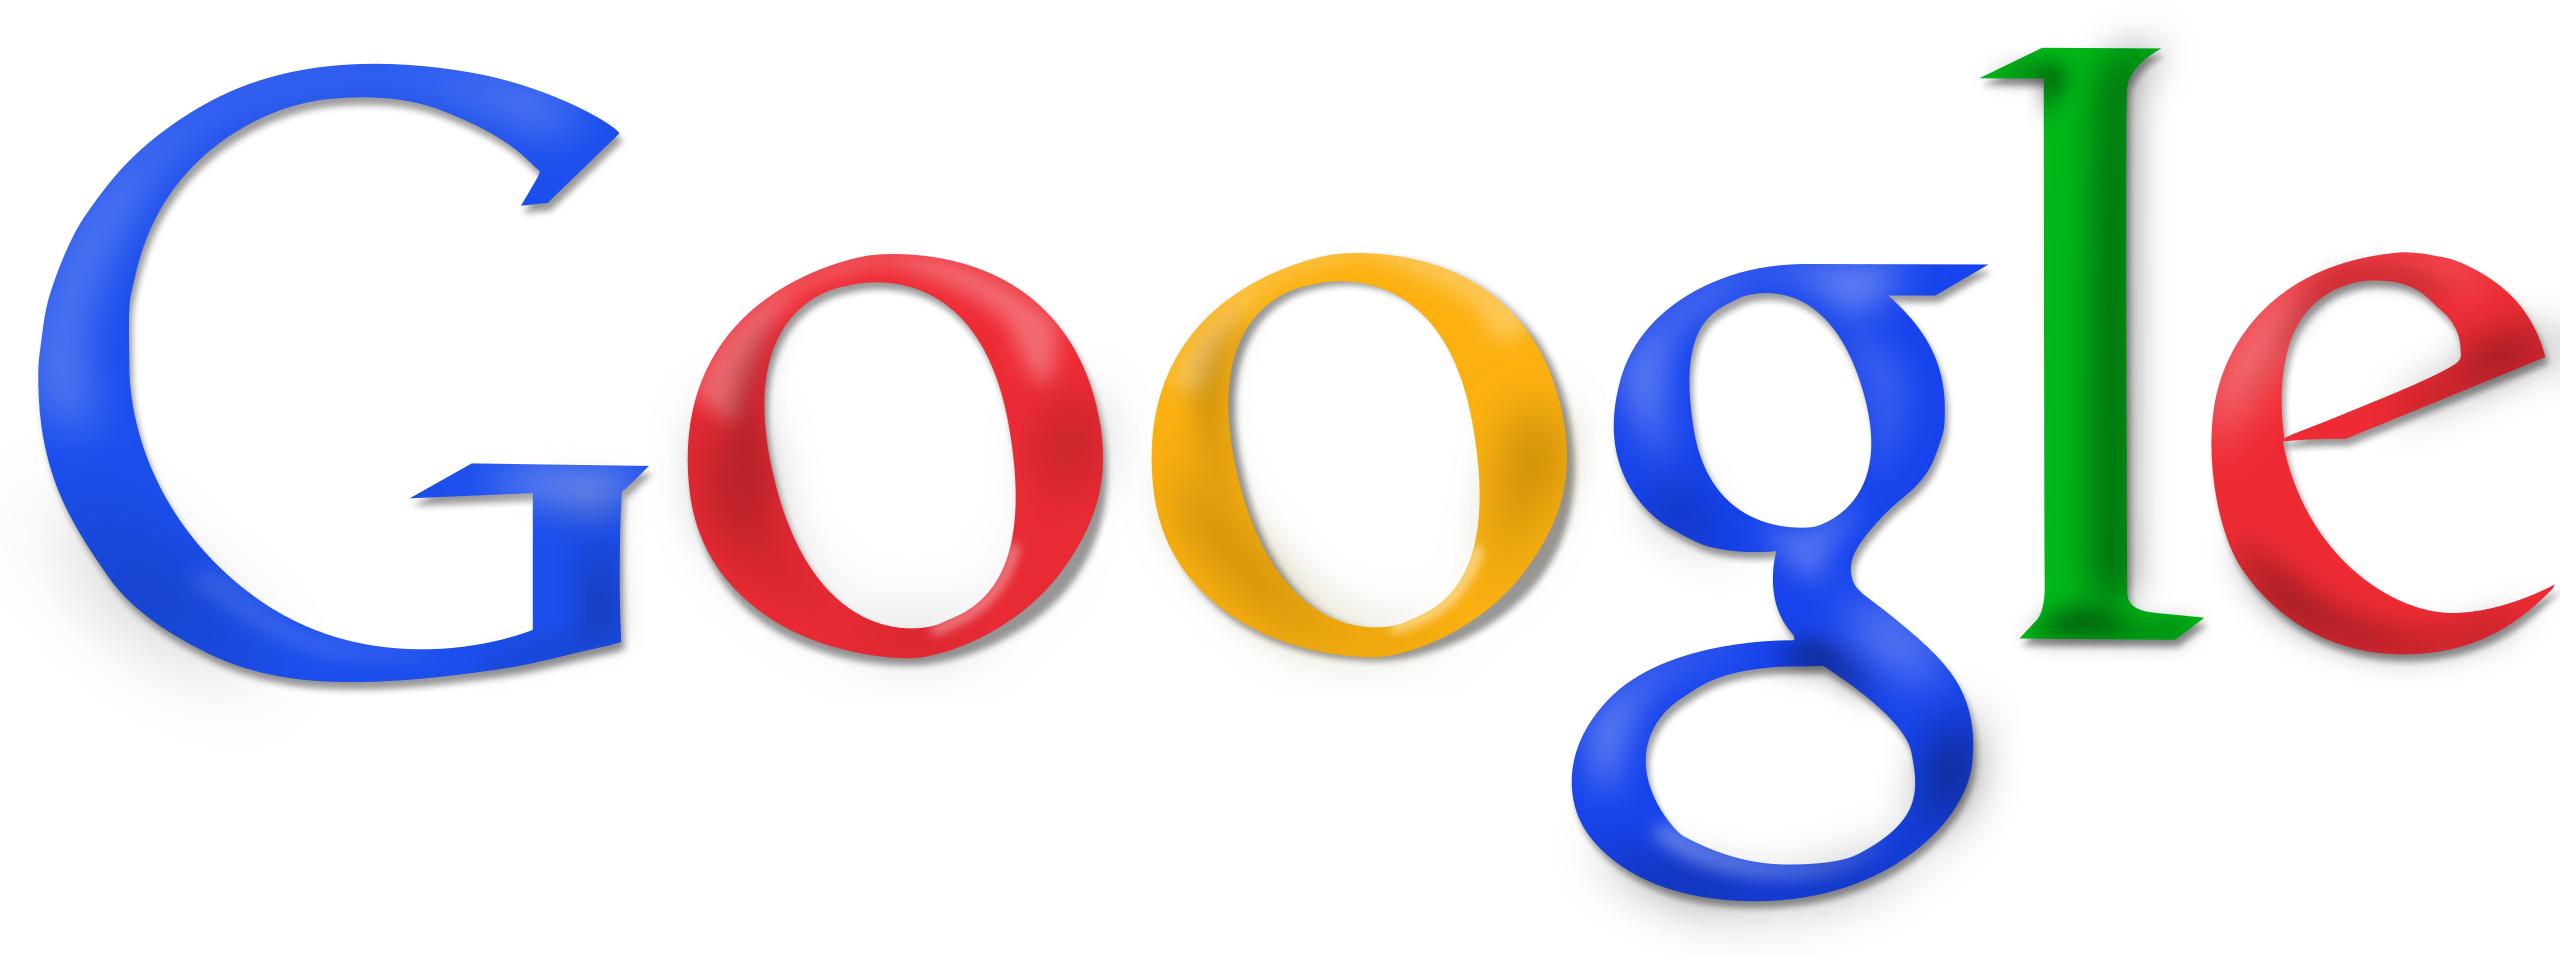 Google Logo Background PNG Image